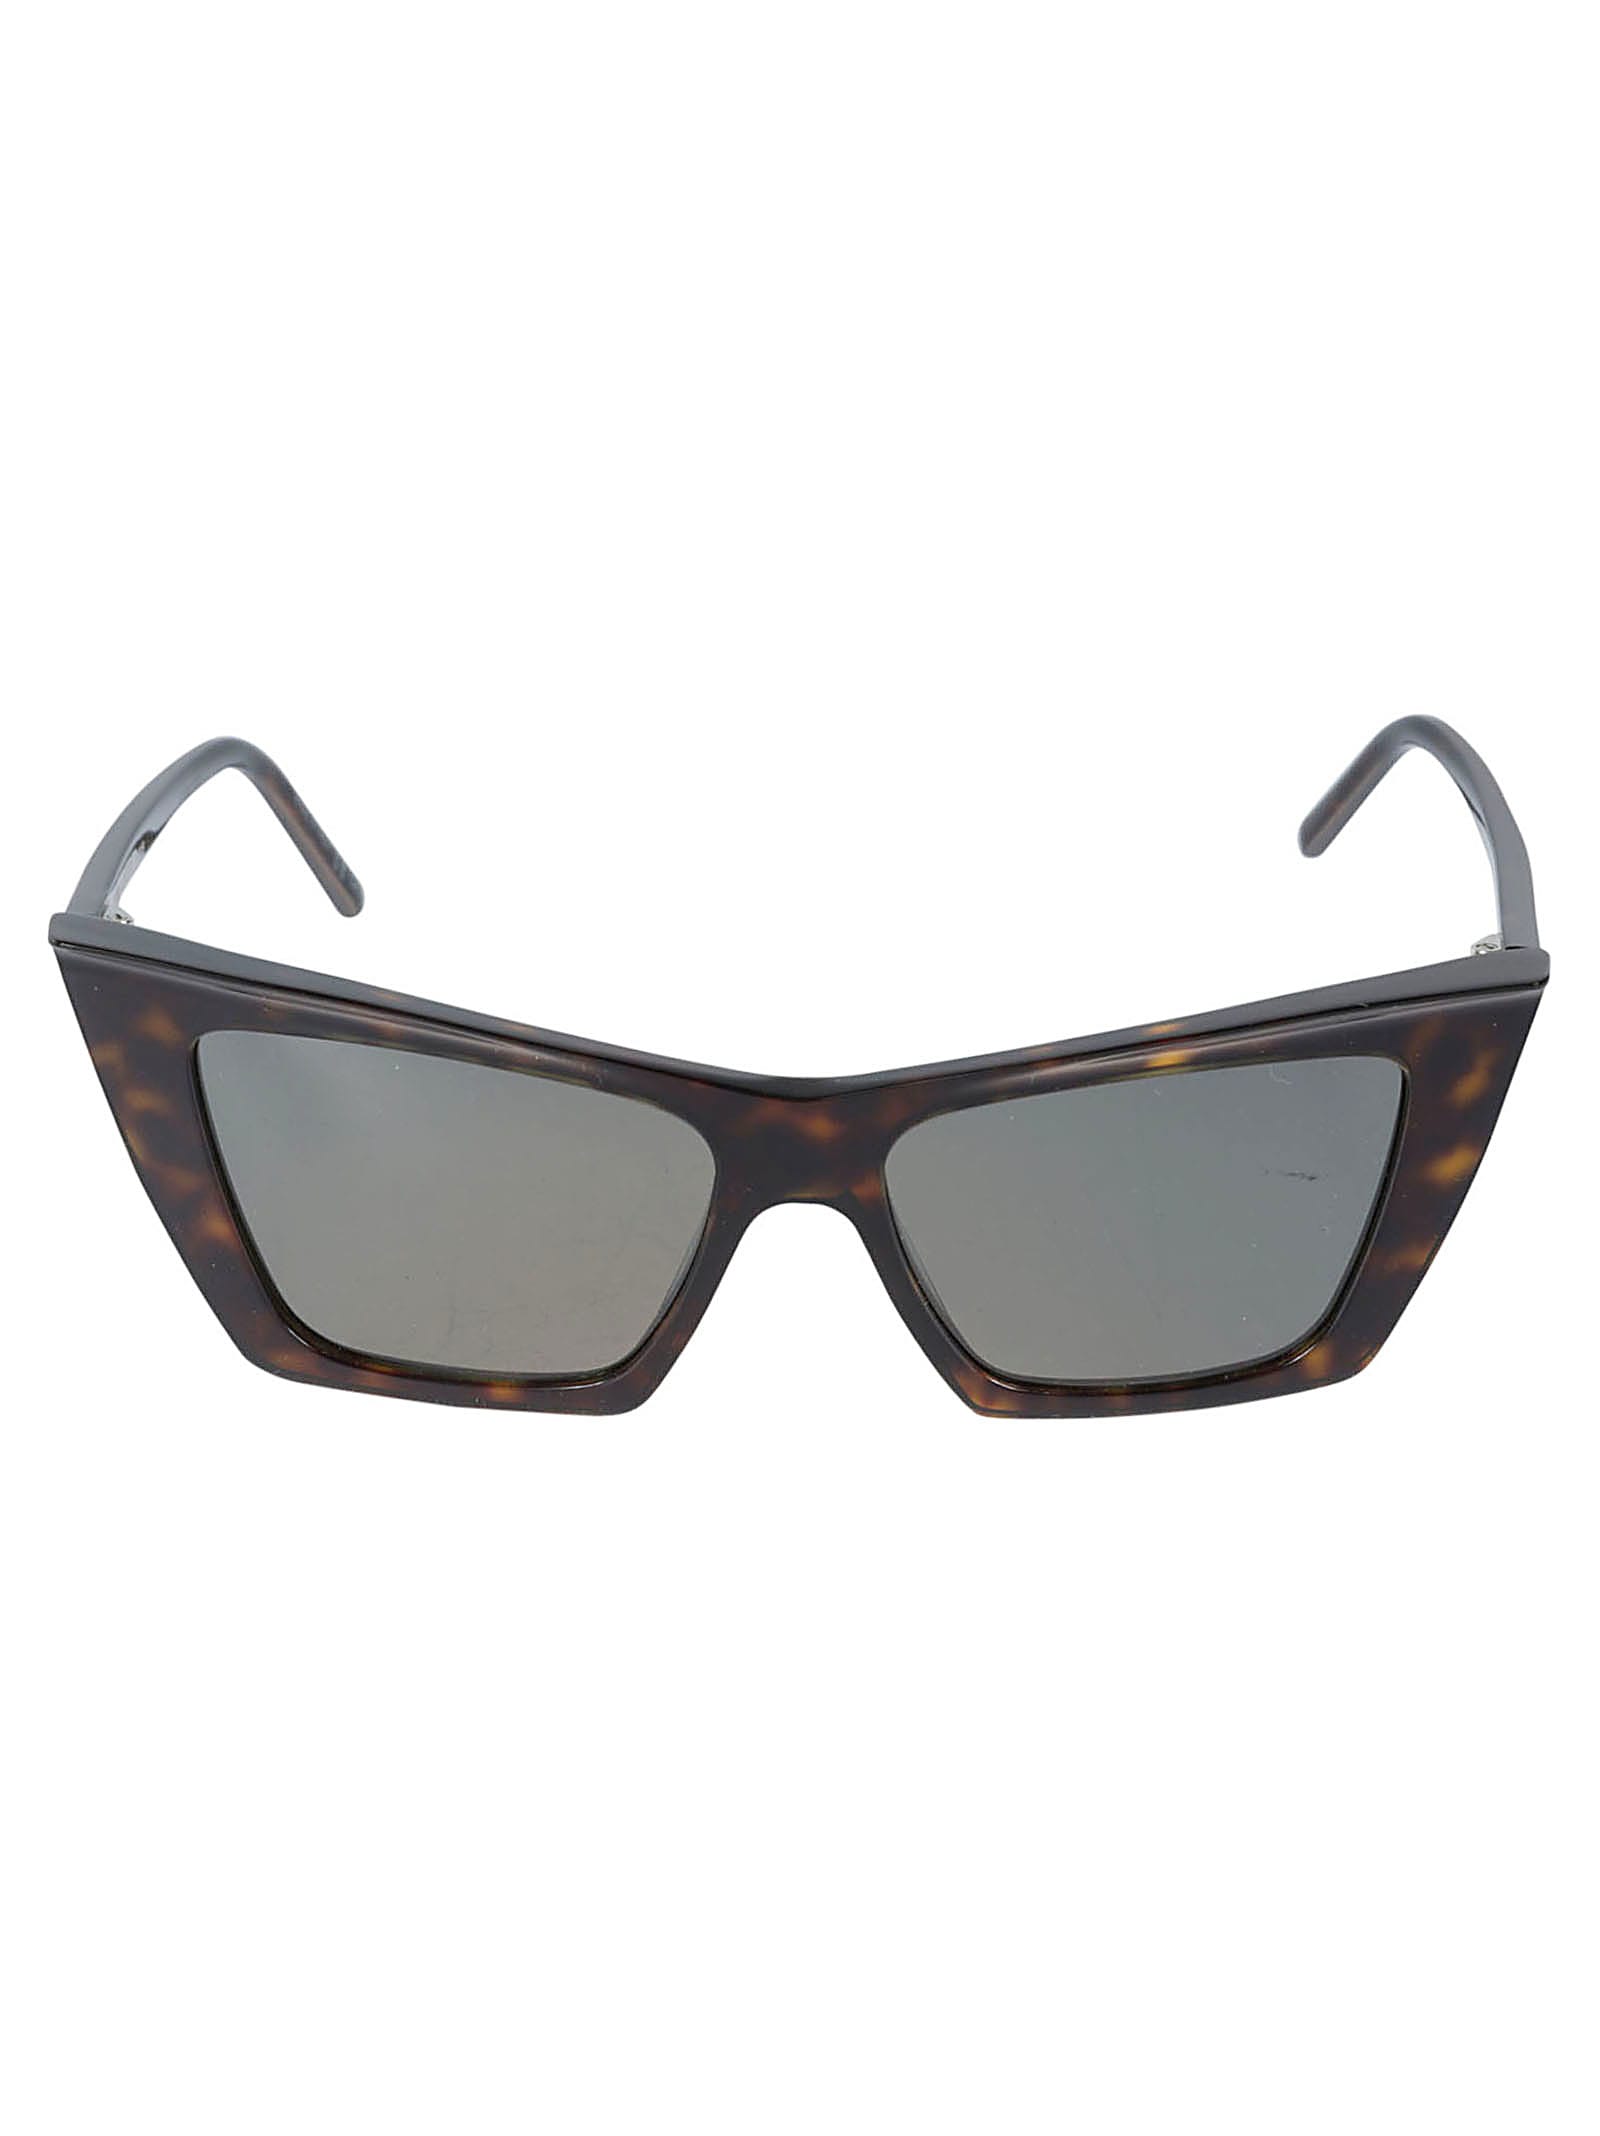 Saint Laurent Eyewear Square Cat Eye Sunglasses